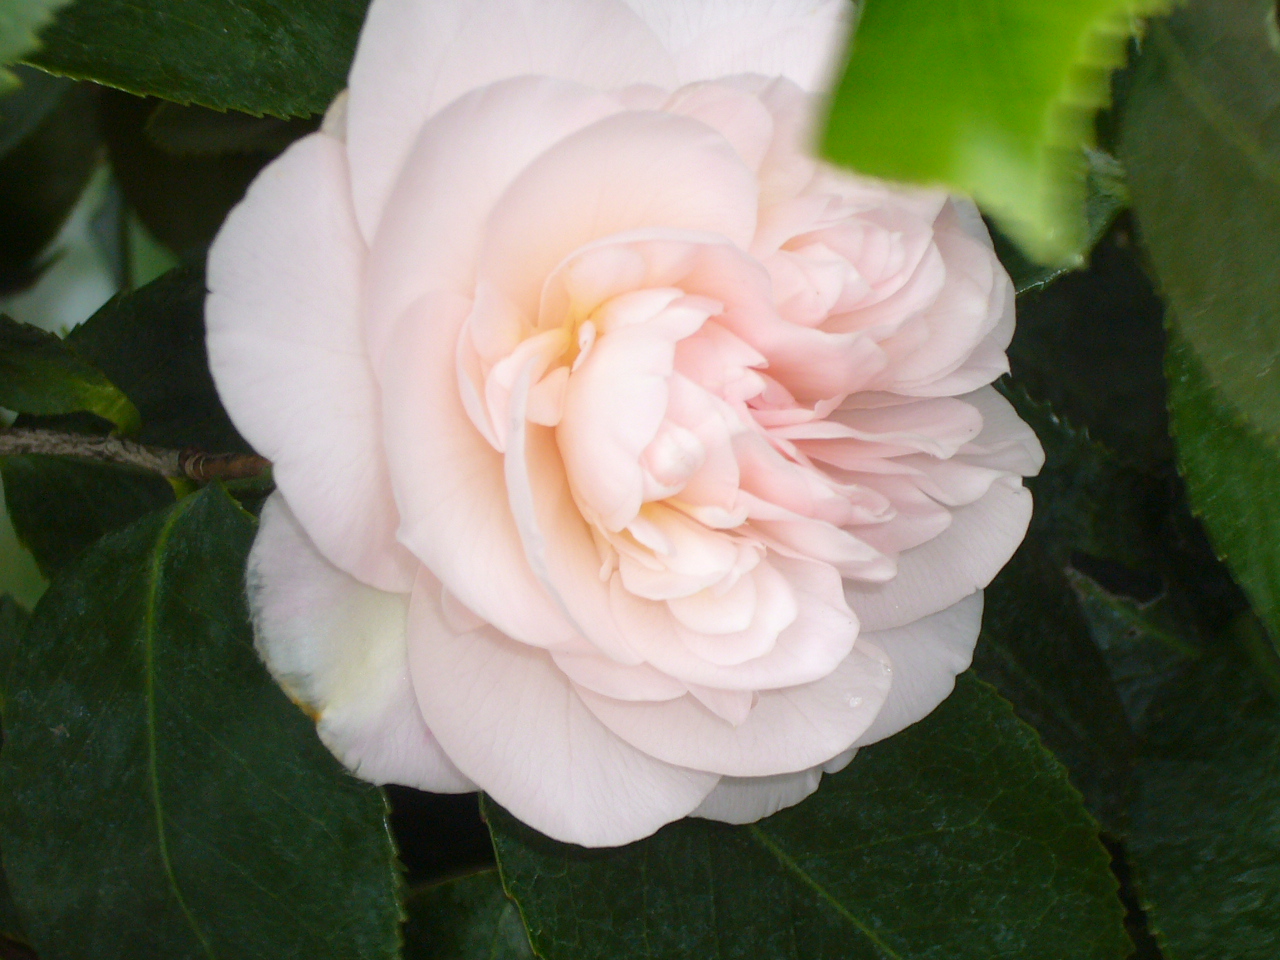 Camellia japonica "Debutante"